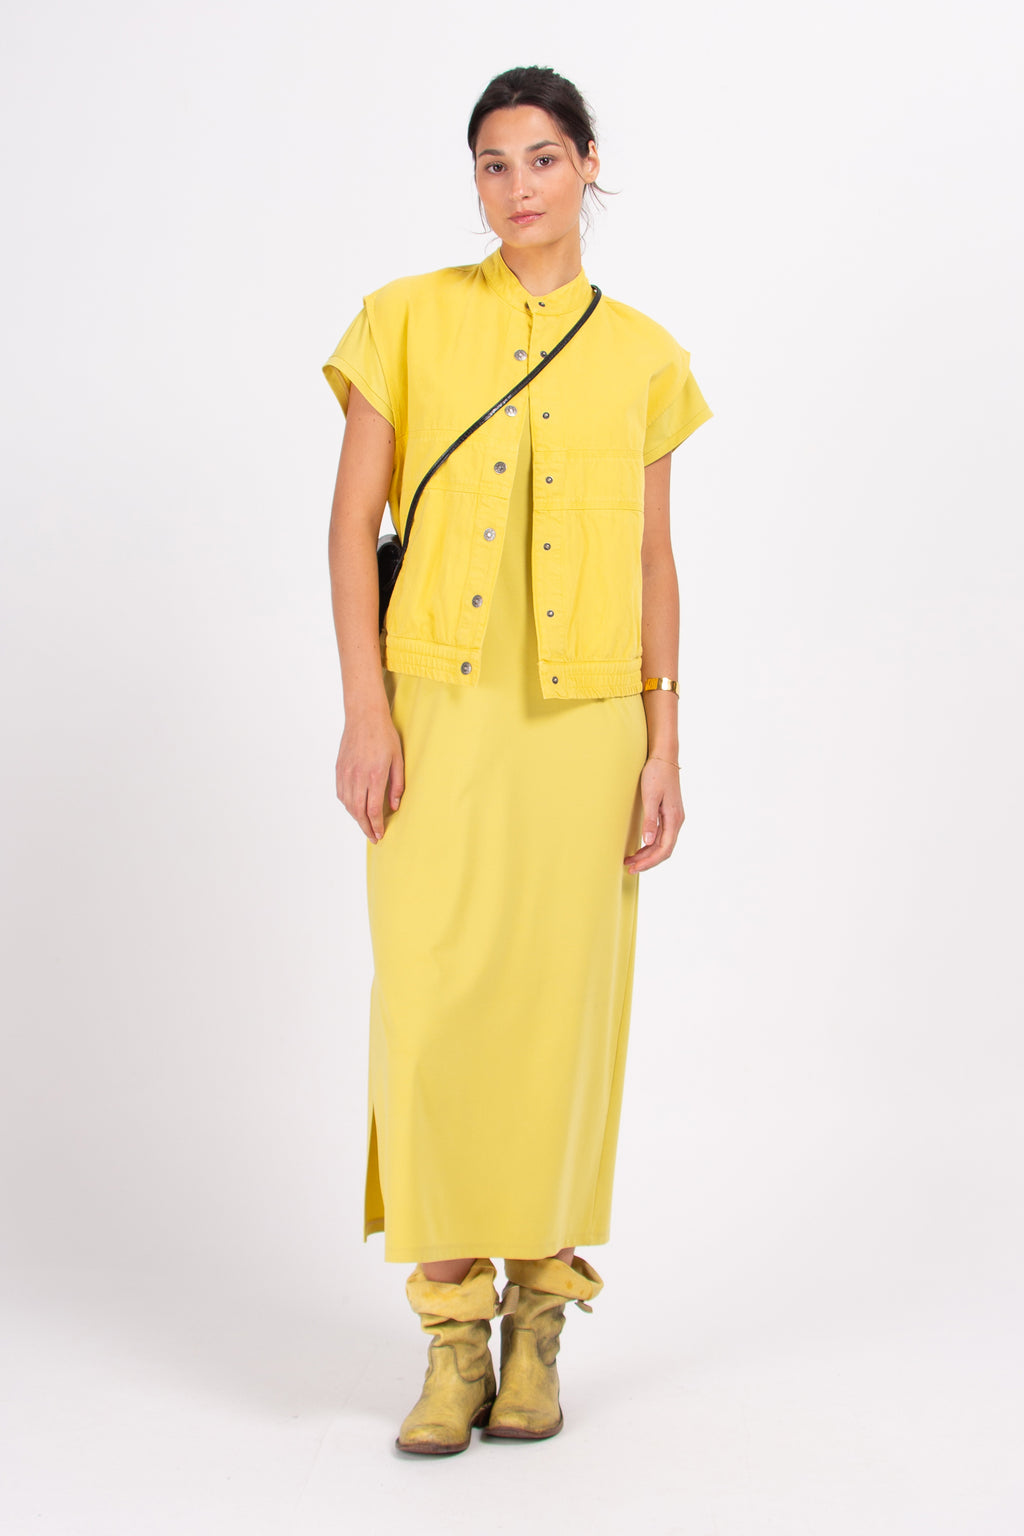 Denise lemon long jersey dress